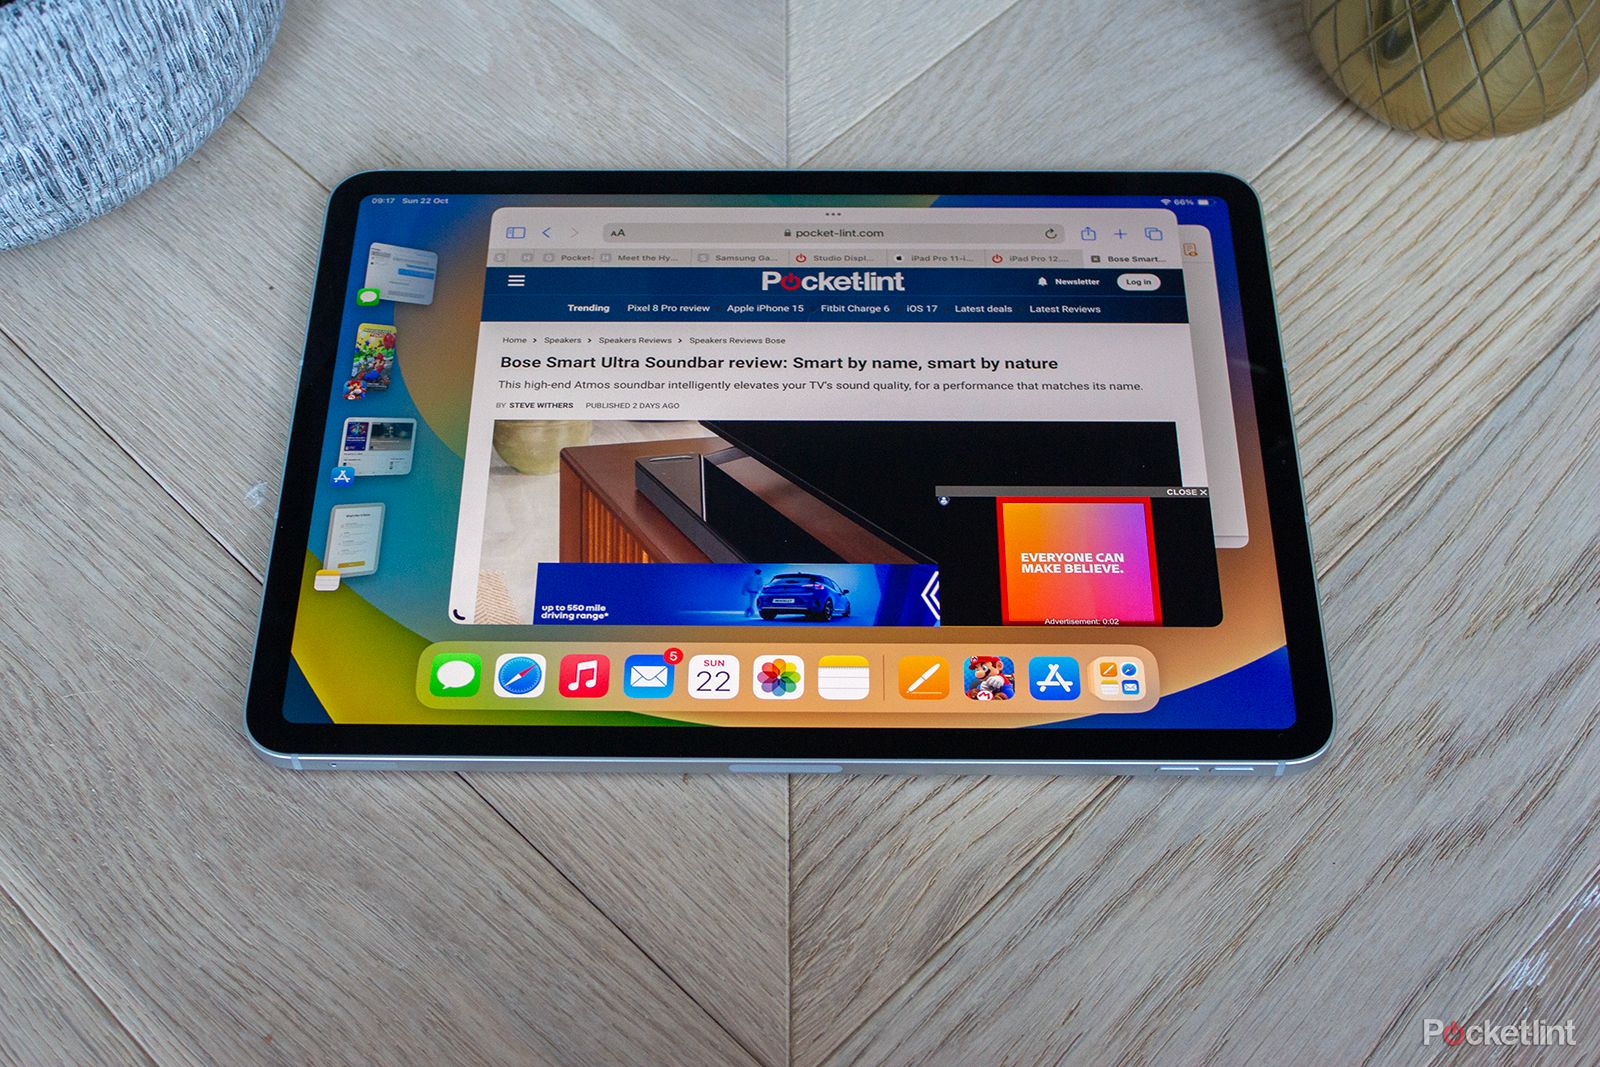 Apple iPad Pro 11-inch (2022) – Colors, Specs & Reviews